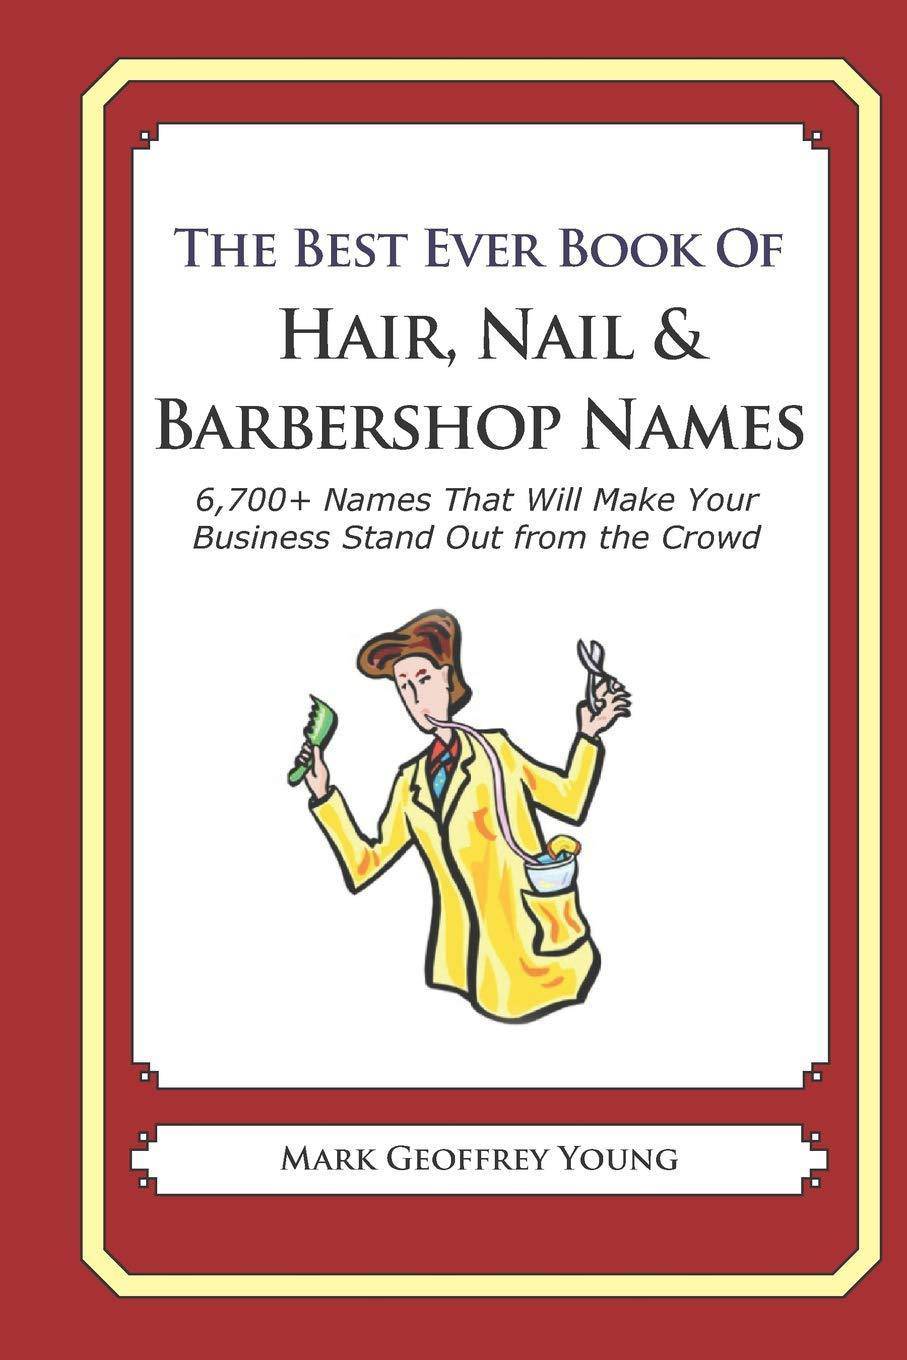 The Best Ever Book of Hair, Nail & Barbershop Names - SureShot Books Publishing LLC